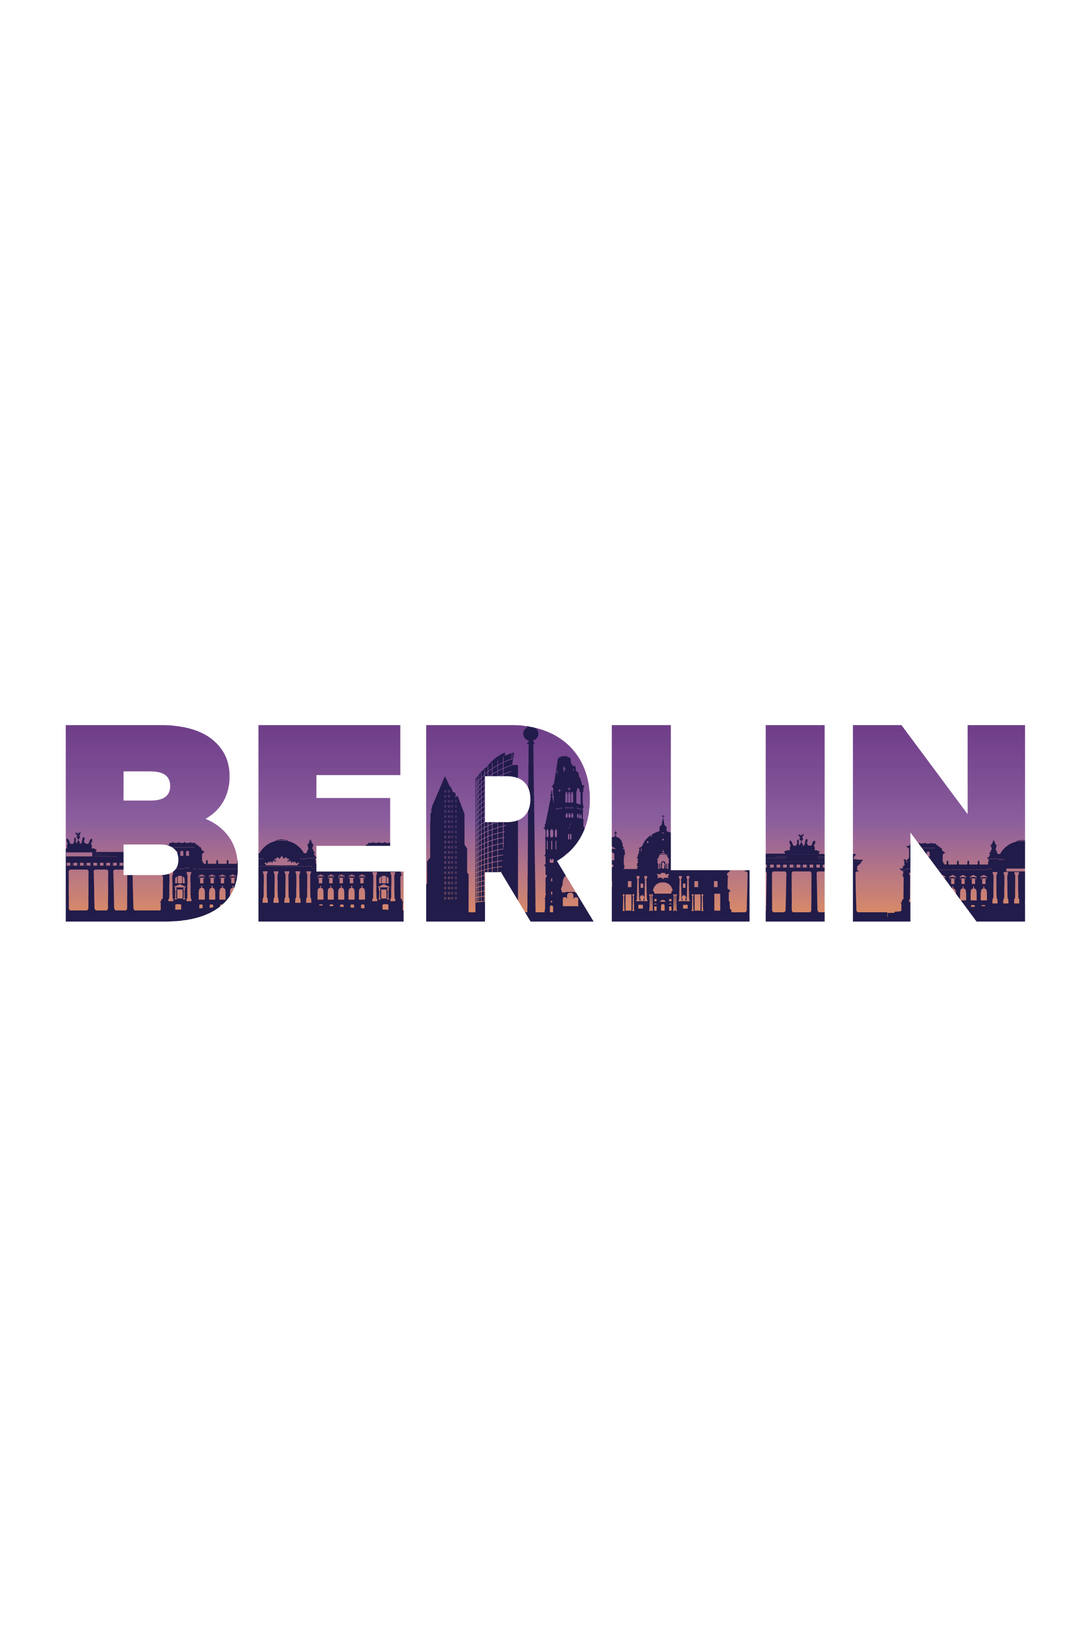 Berlin Skyline Printed T-Shirt For Women - WowWaves - 1